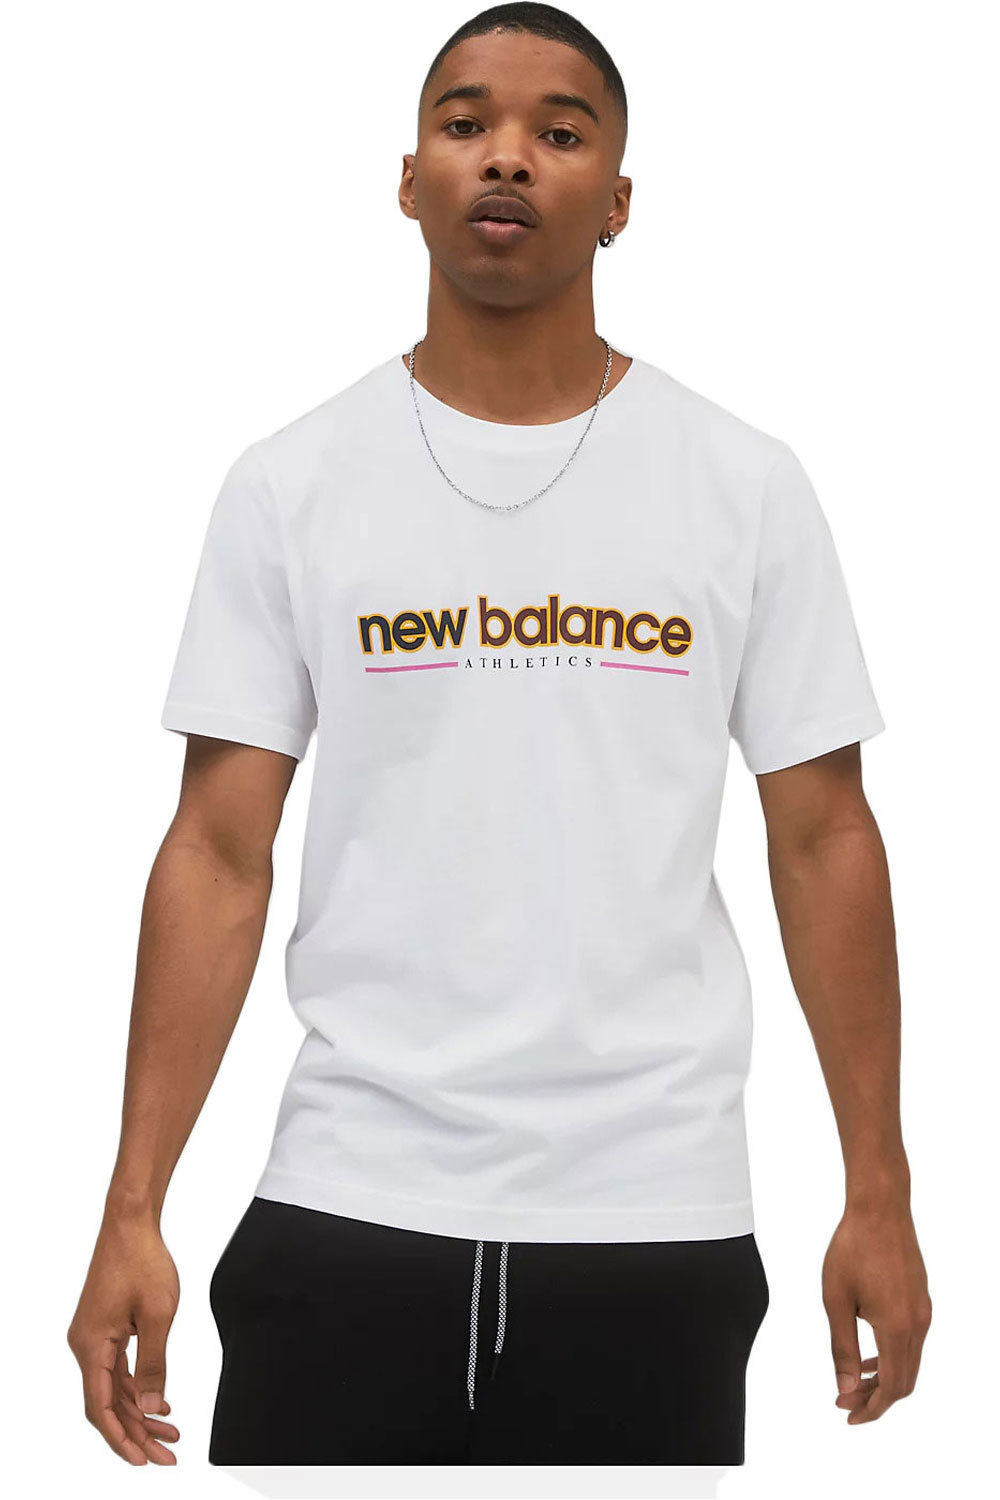 New Balance camiseta manga corta hombre NB Athletics Higher Learning Tee vista frontal